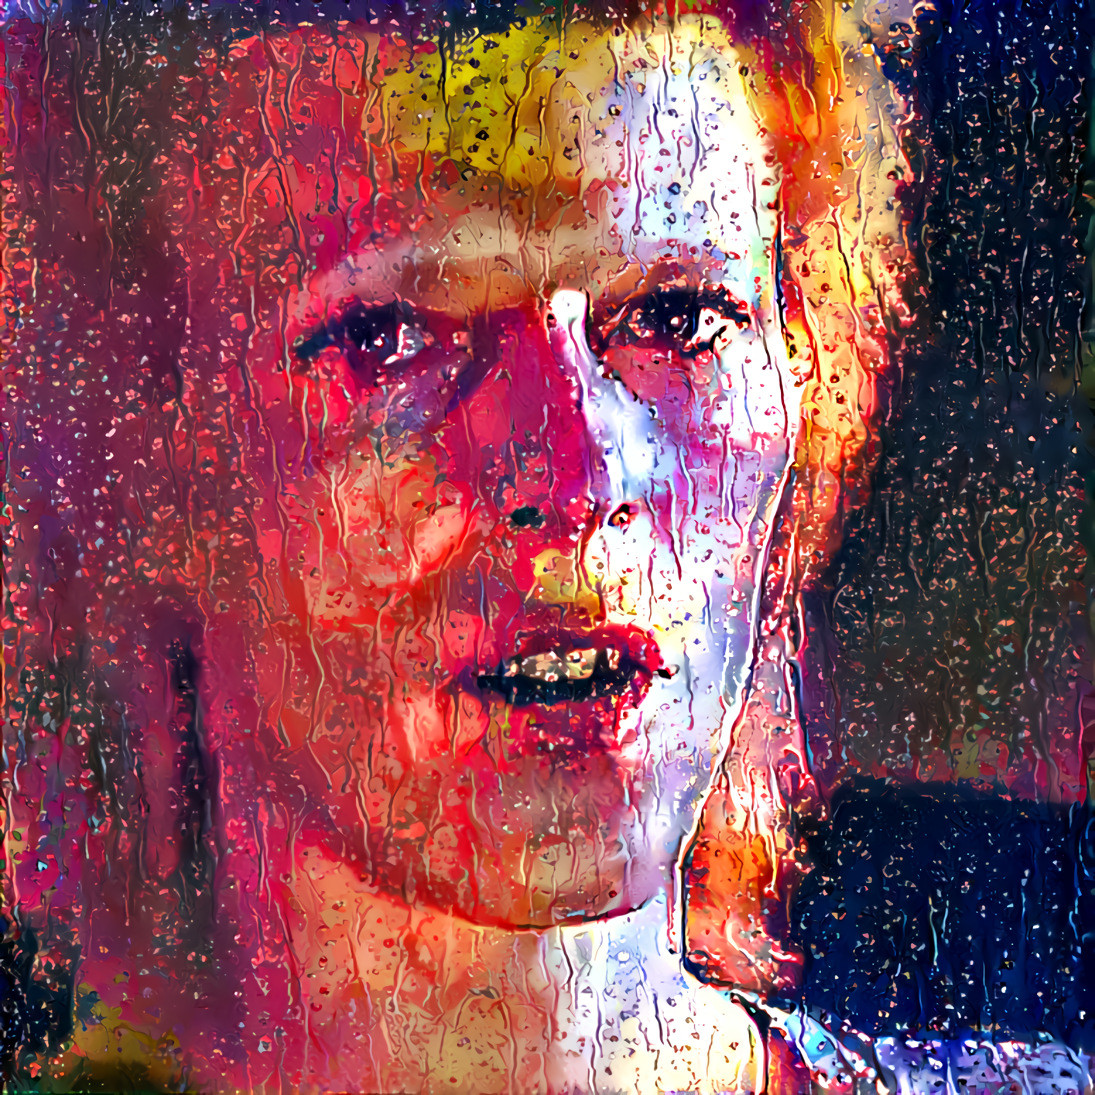 Random stuff - David Bowie in 'Space Oddity' video